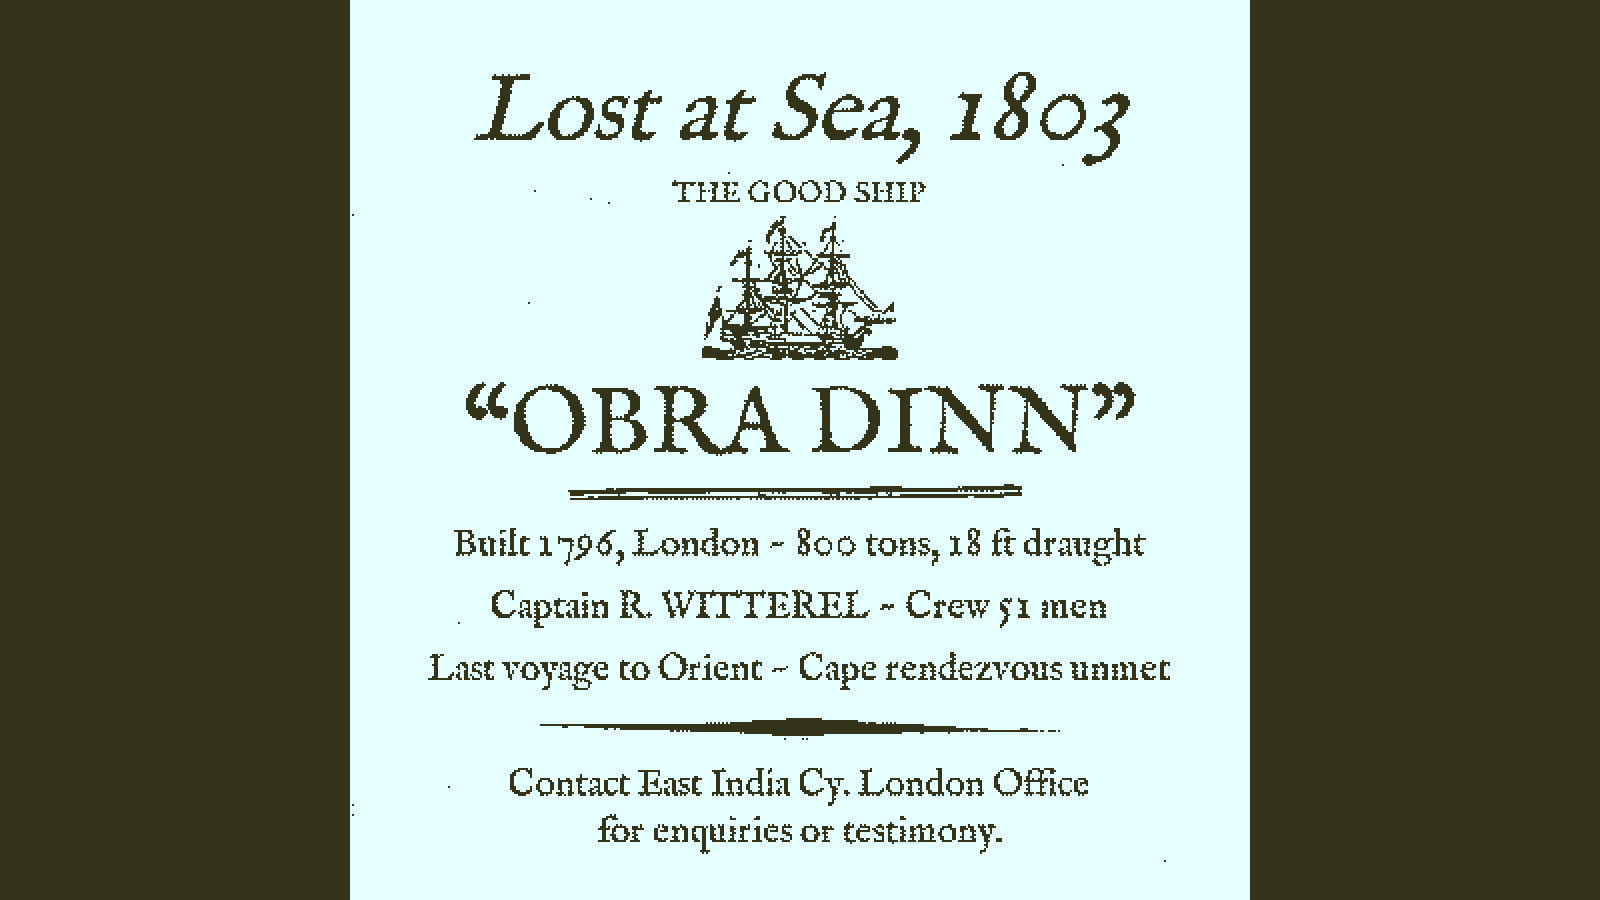 Return of the Obra Dinn screenshot